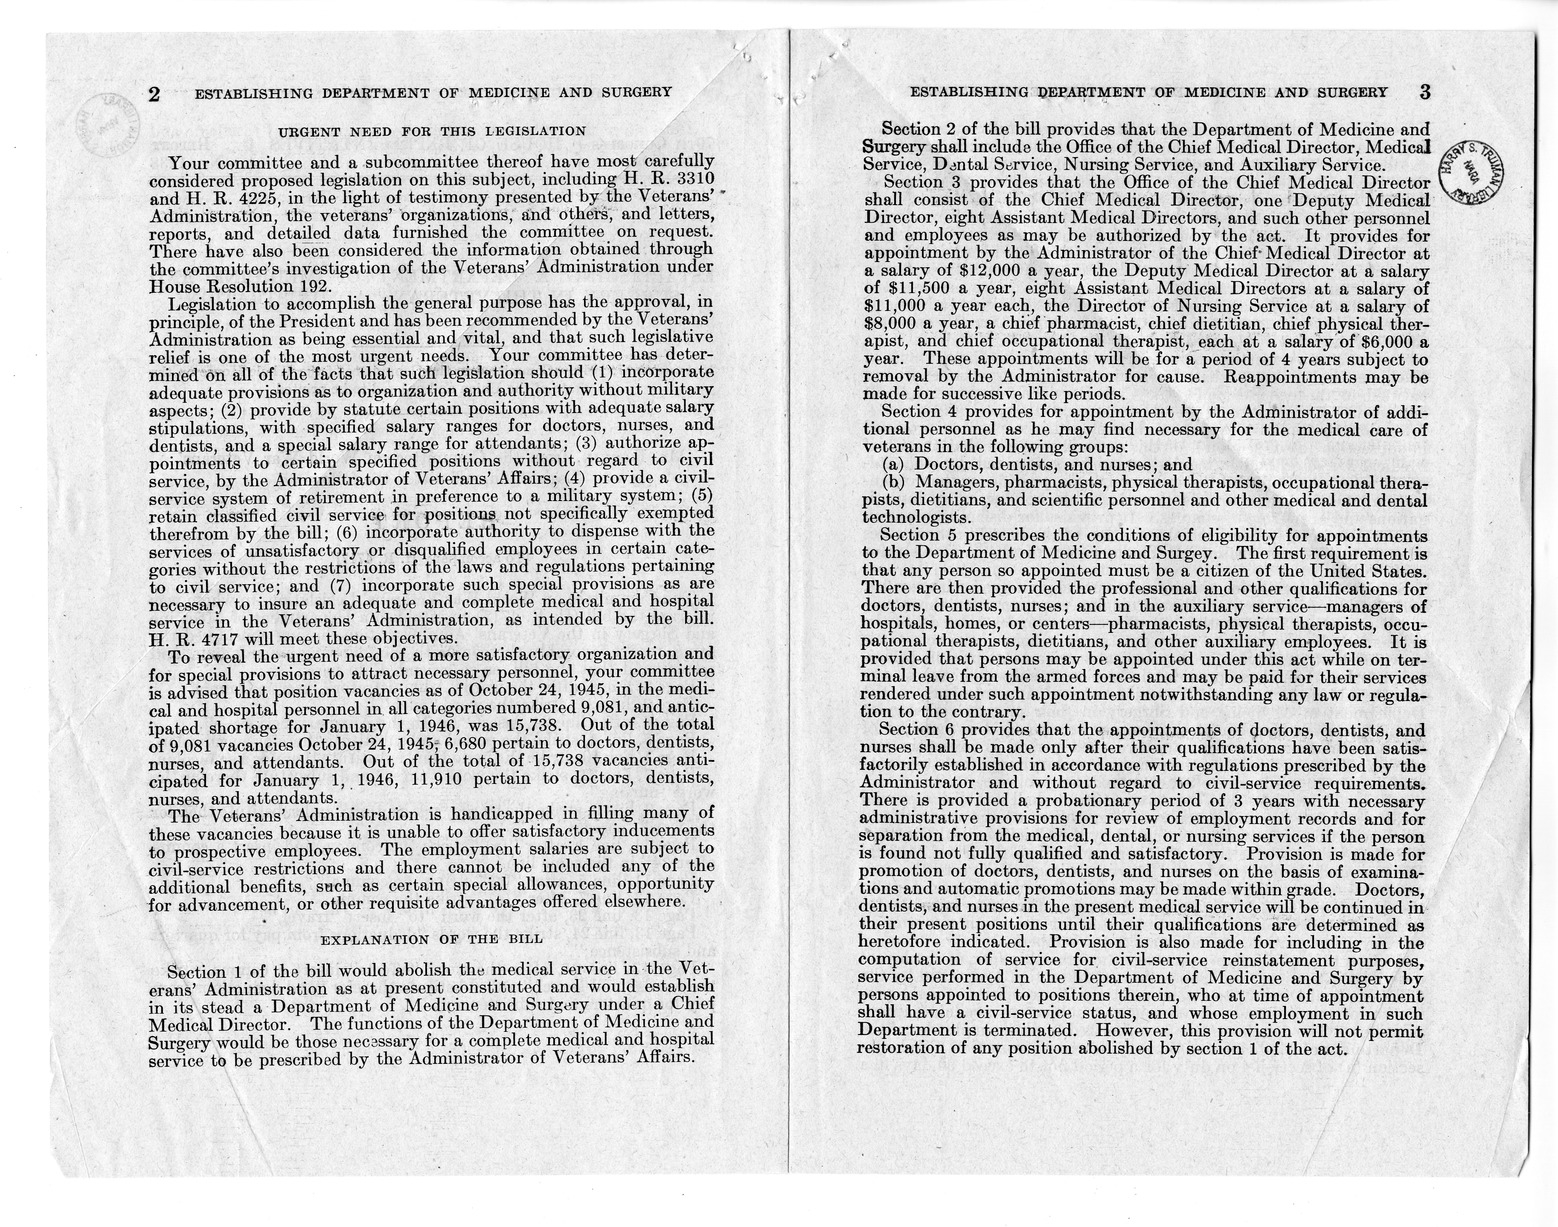 Memorandum from Raymond Zimmerman to President Harry S. Truman, with Attachment